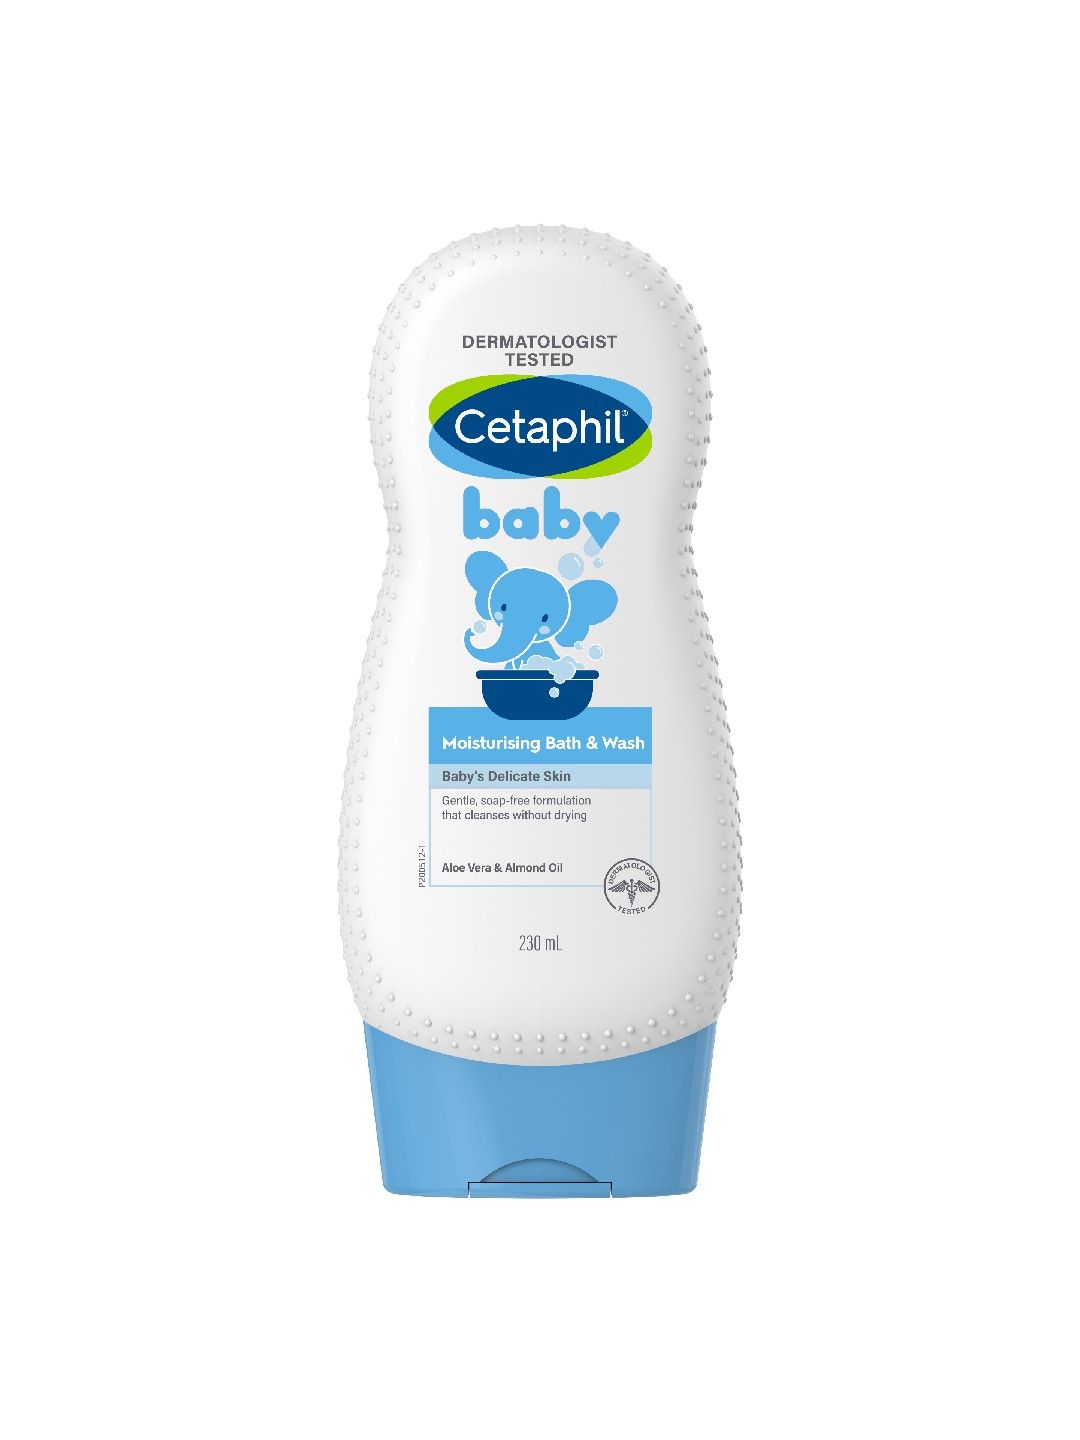 Cetaphil Baby Baby Moisturizing Bath & Wash (230ml)